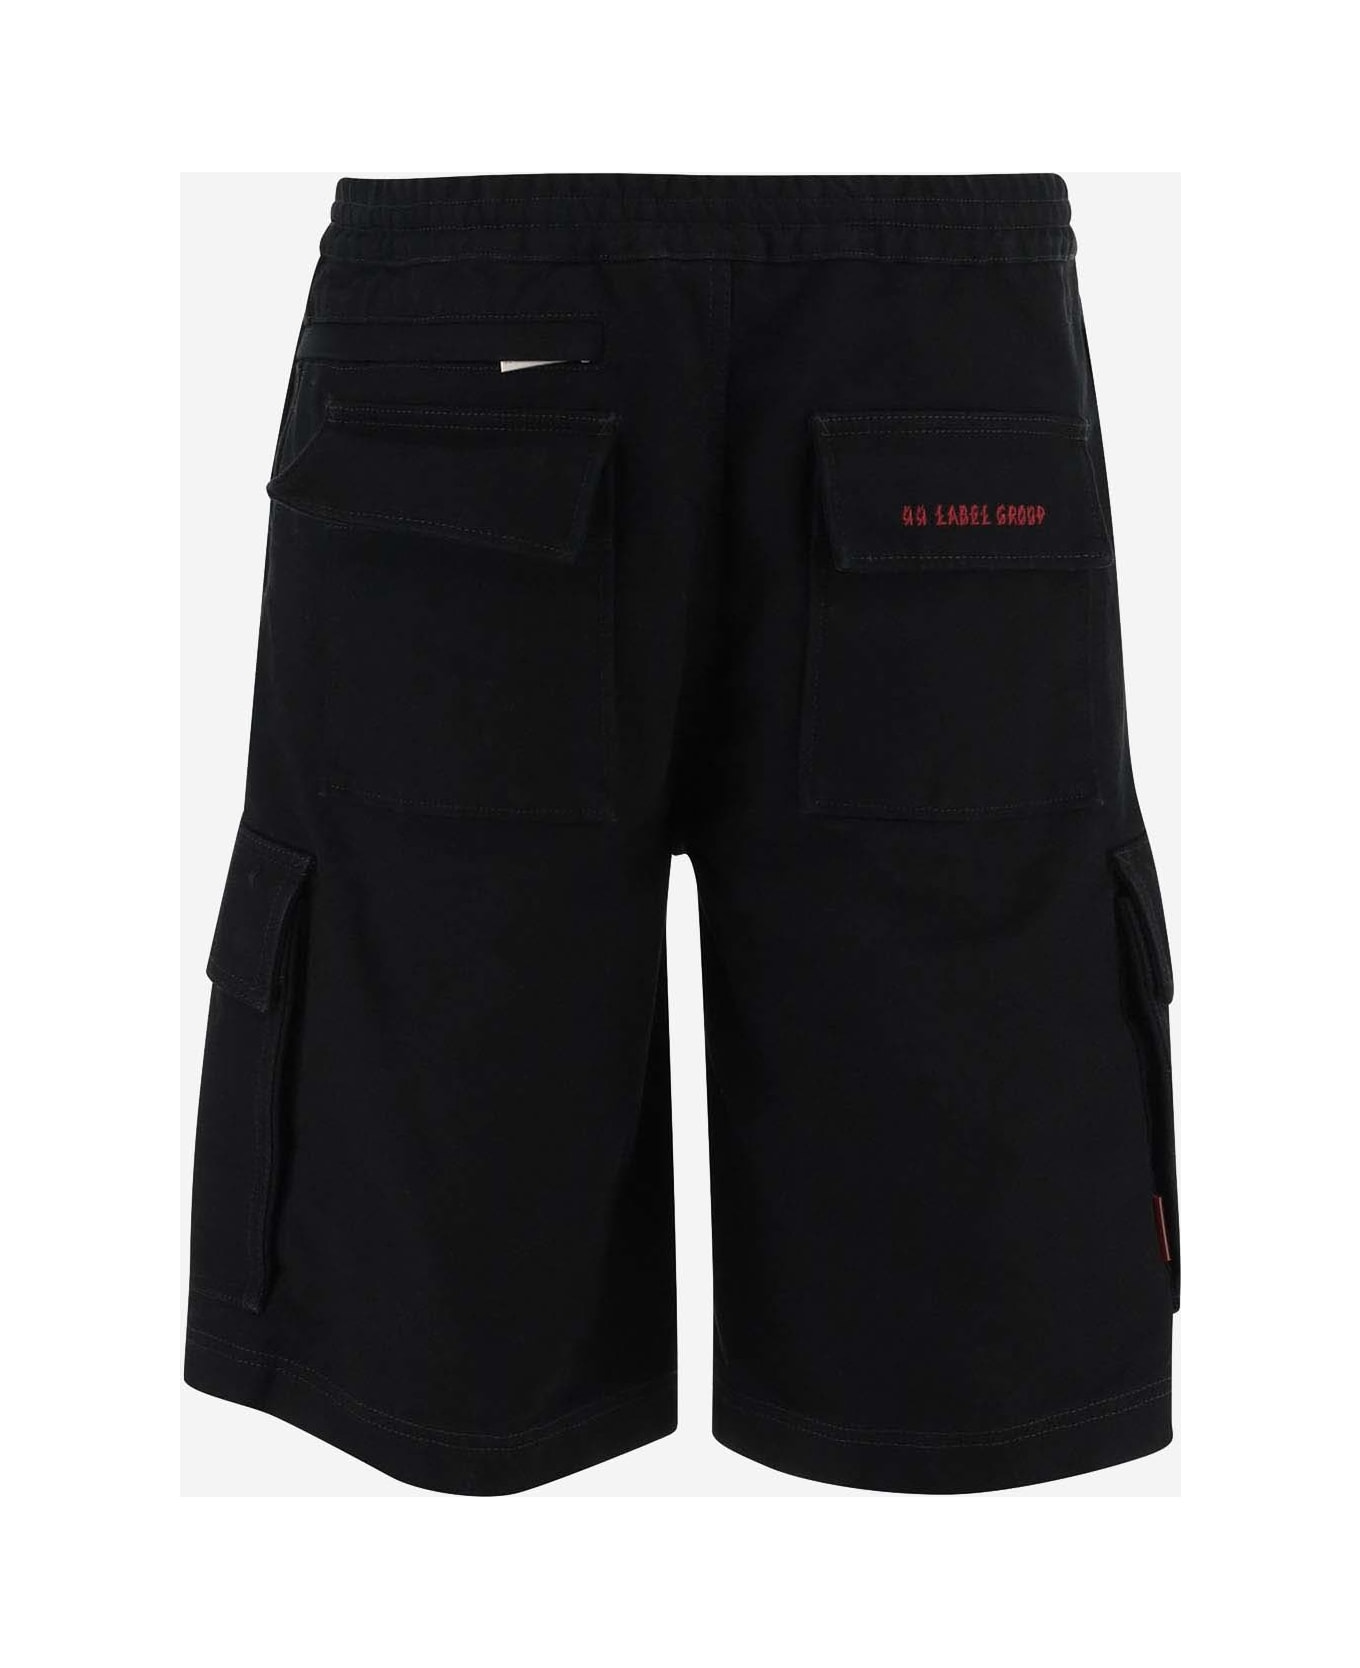 44 Label Group Cotton Bermuda Shorts With Logo - Black